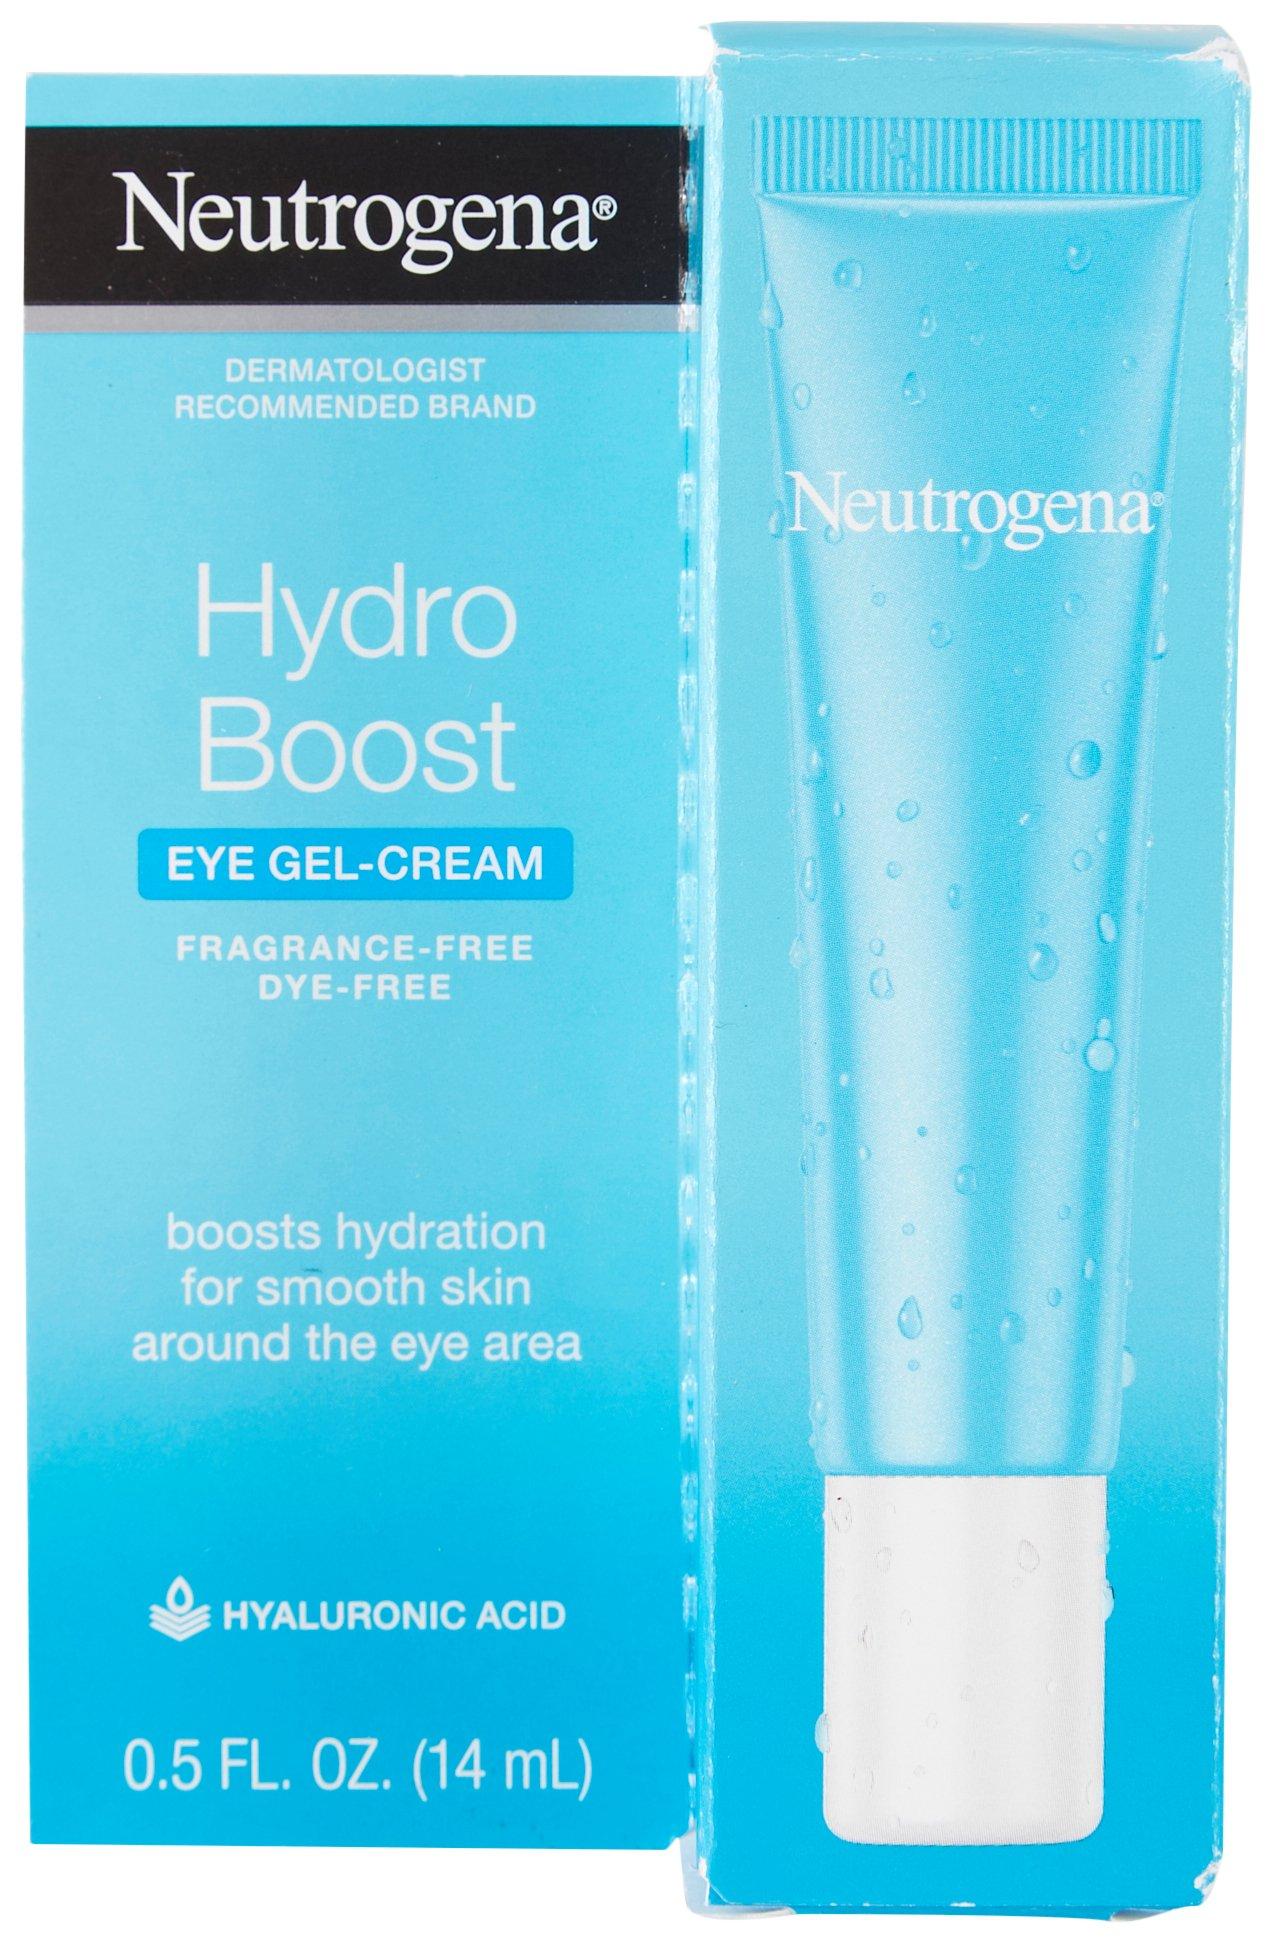 Neutrogena Hydro Boost Hyaluronic Acid Eye Gel Cream